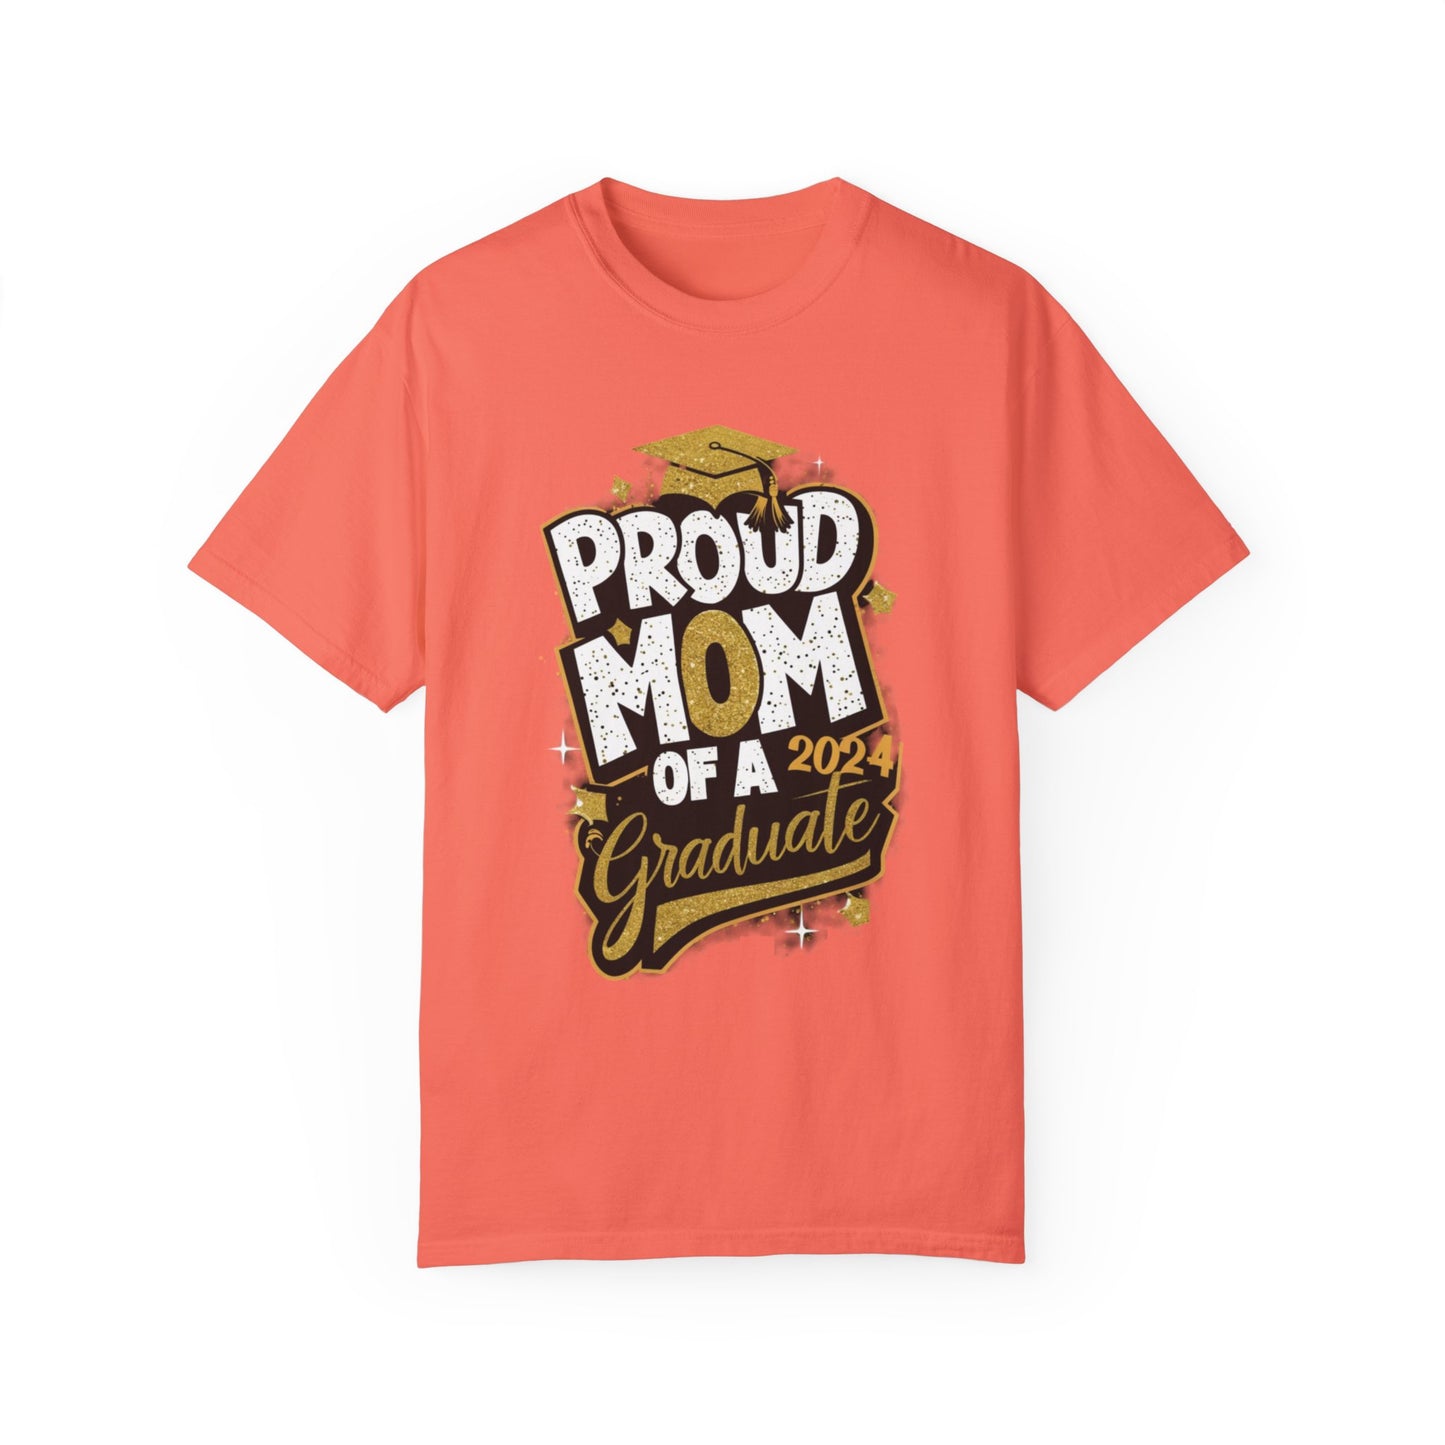 Proud Mom of a 2024 Graduate Unisex Garment-dyed T-shirt Cotton Funny Humorous Graphic Soft Premium Unisex Men Women Bright Salmon T-shirt Birthday Gift-6